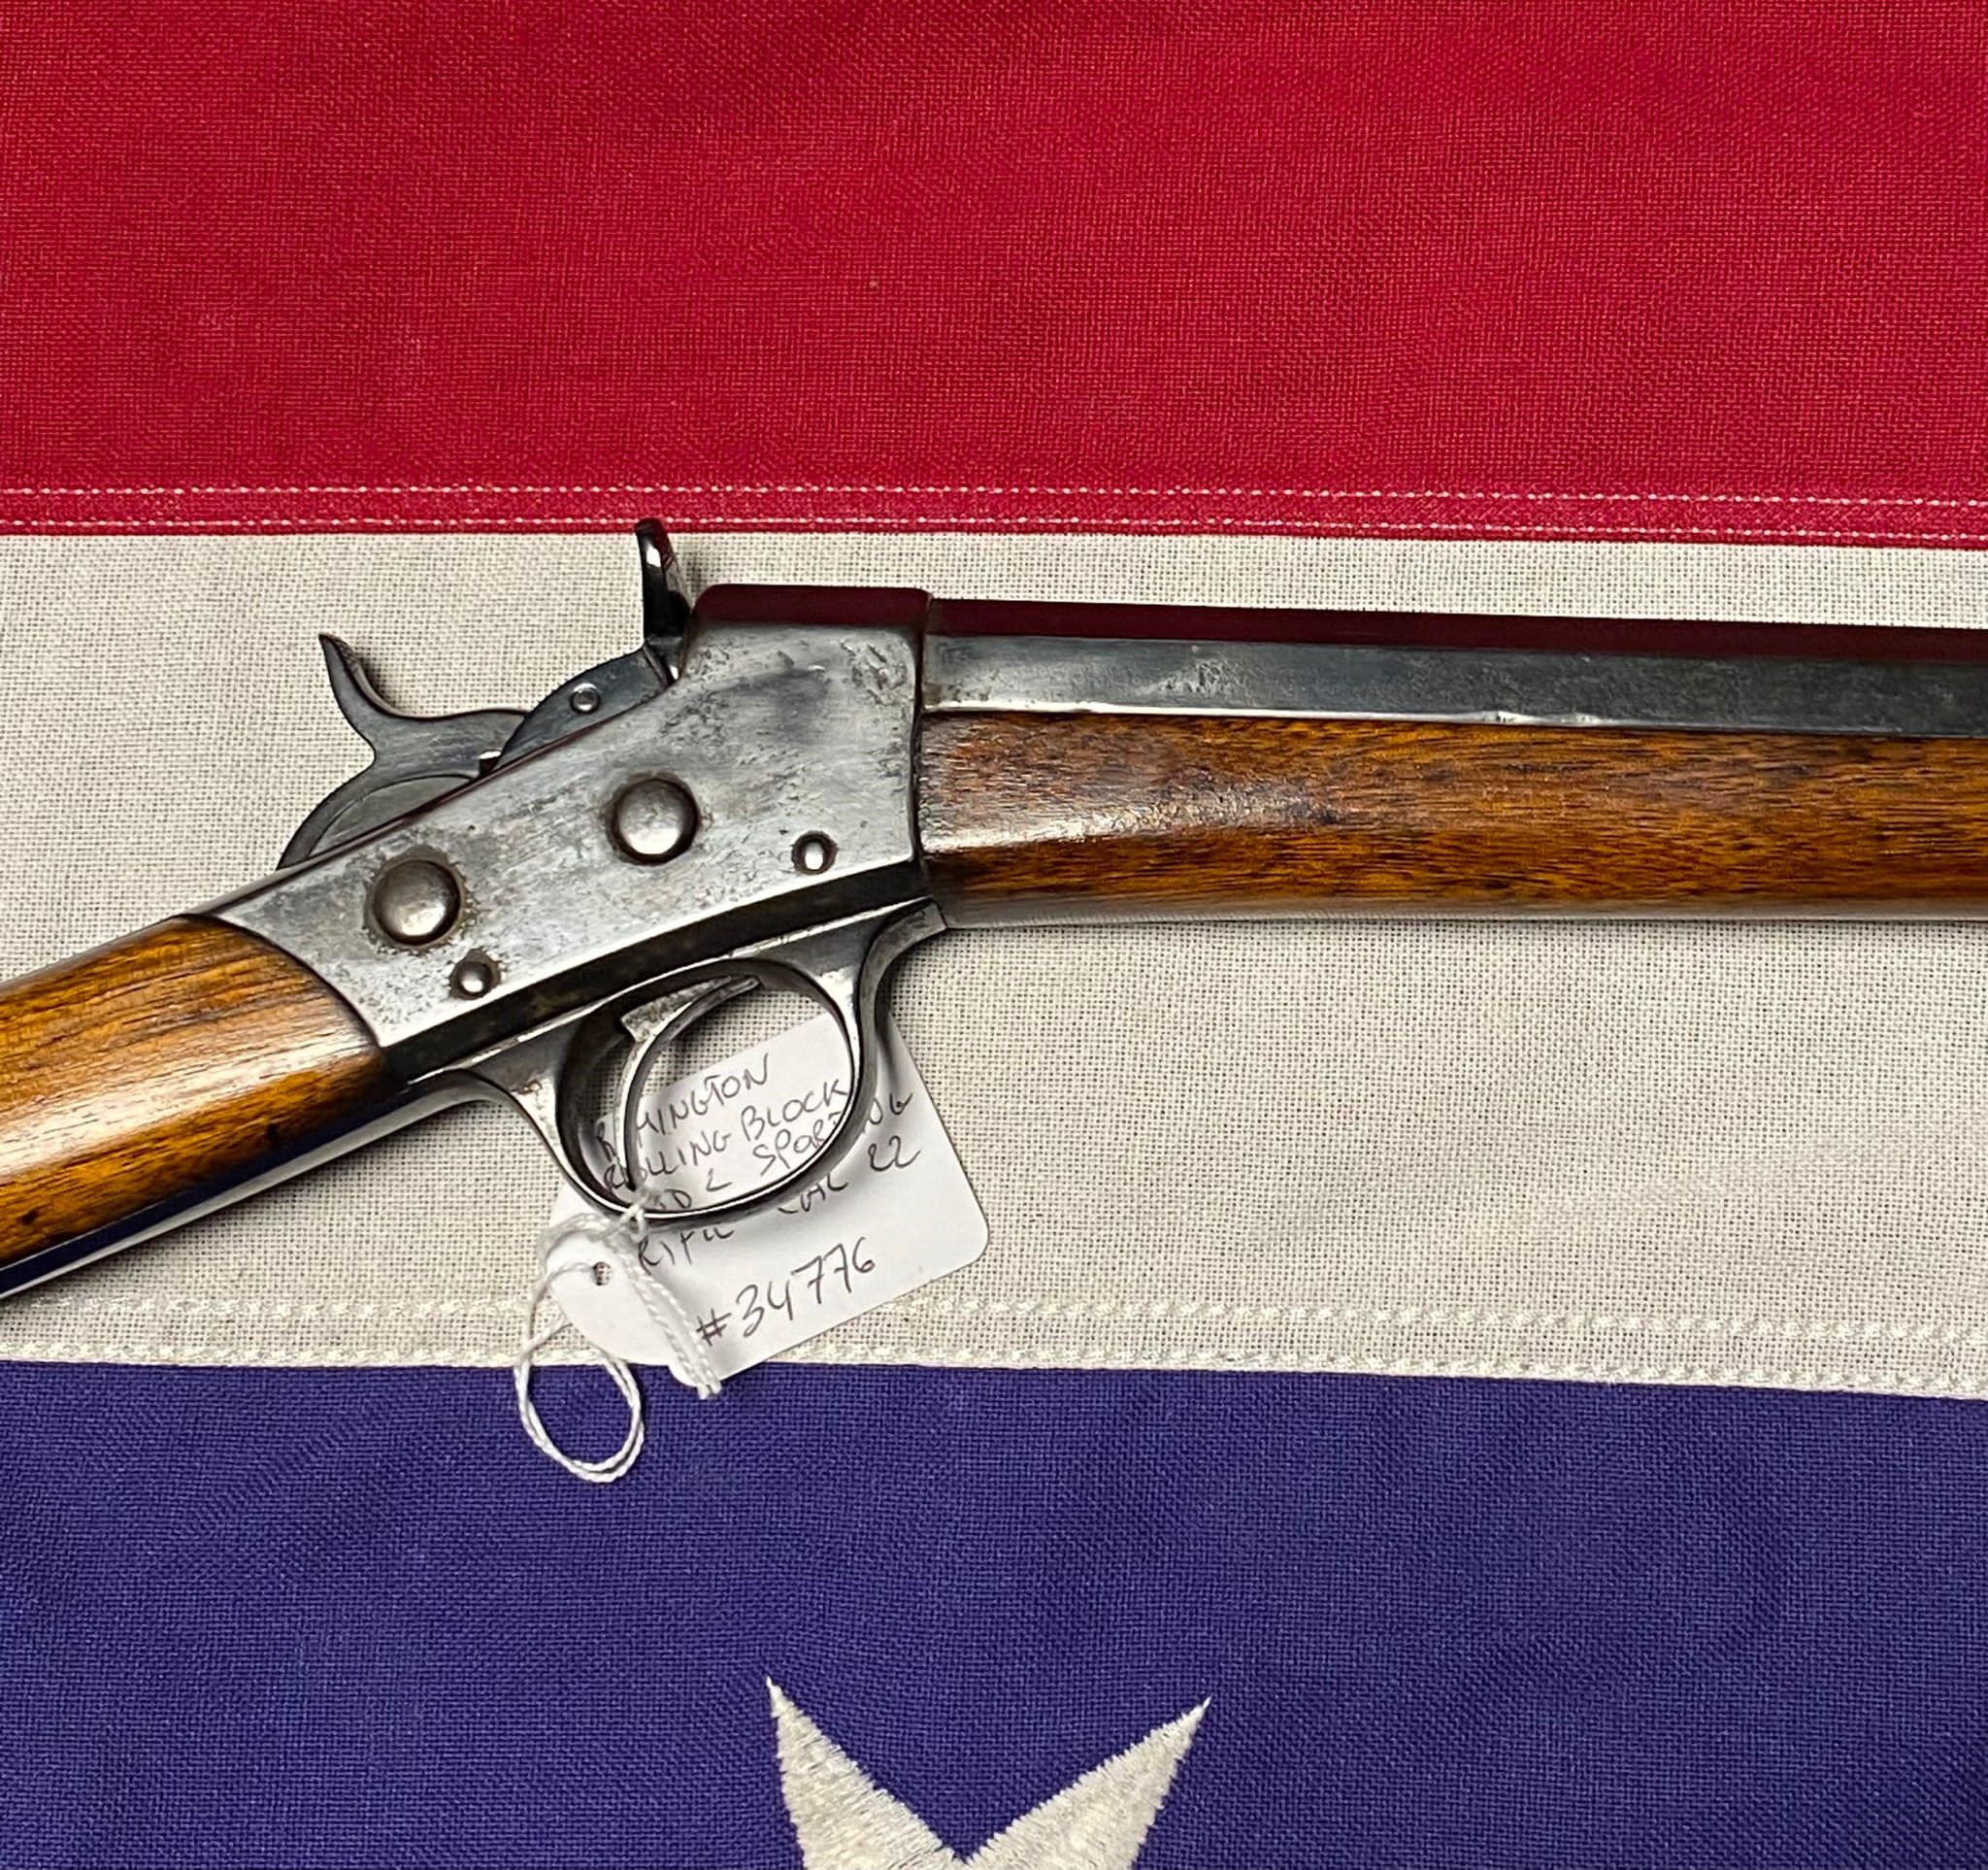 Remington model 2 Rolling Block sporting rifle in cal. 22